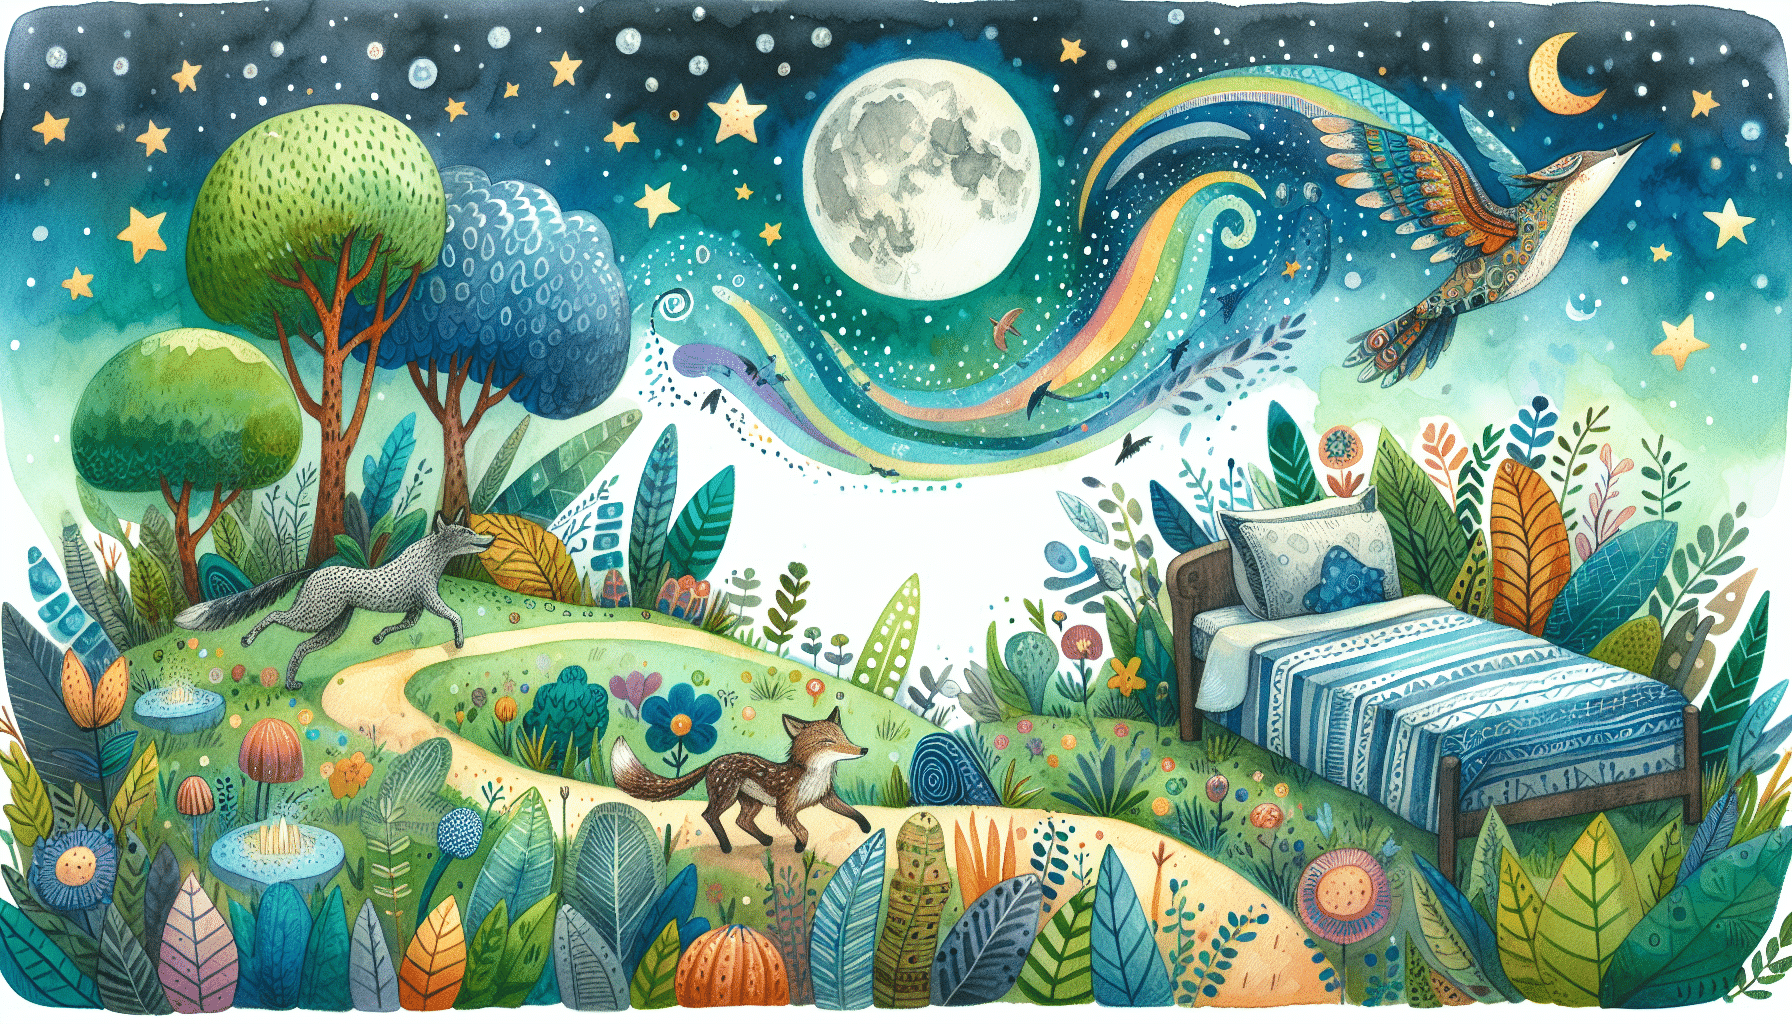 Lunas Magical Nighttime Journey to Dreamland